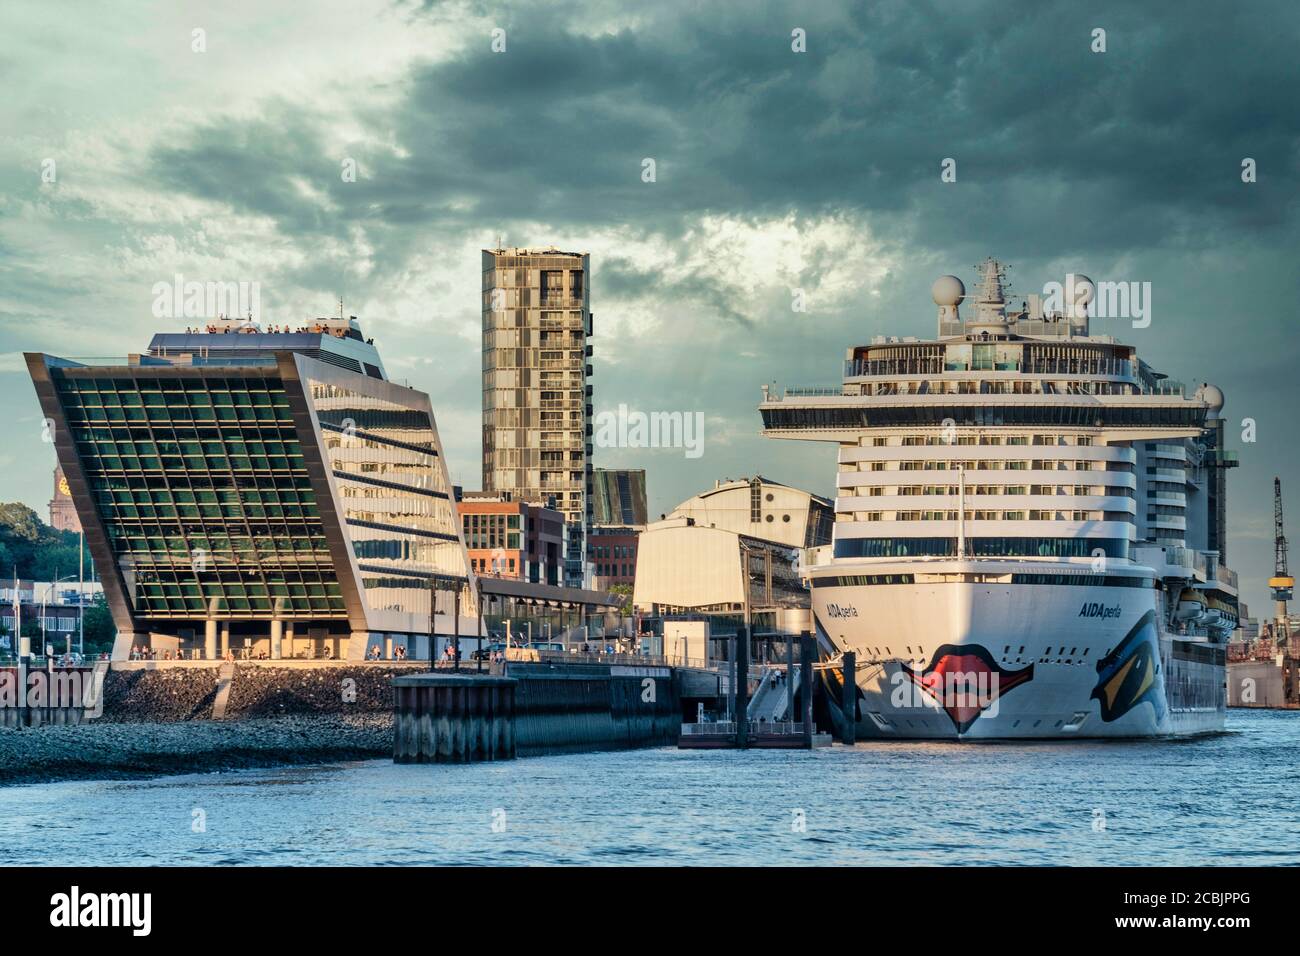 Kreuzfahrtschiff Aida Perla, Hamburger Hafen, Hamburg, Deutschland, Europa Stock Photo